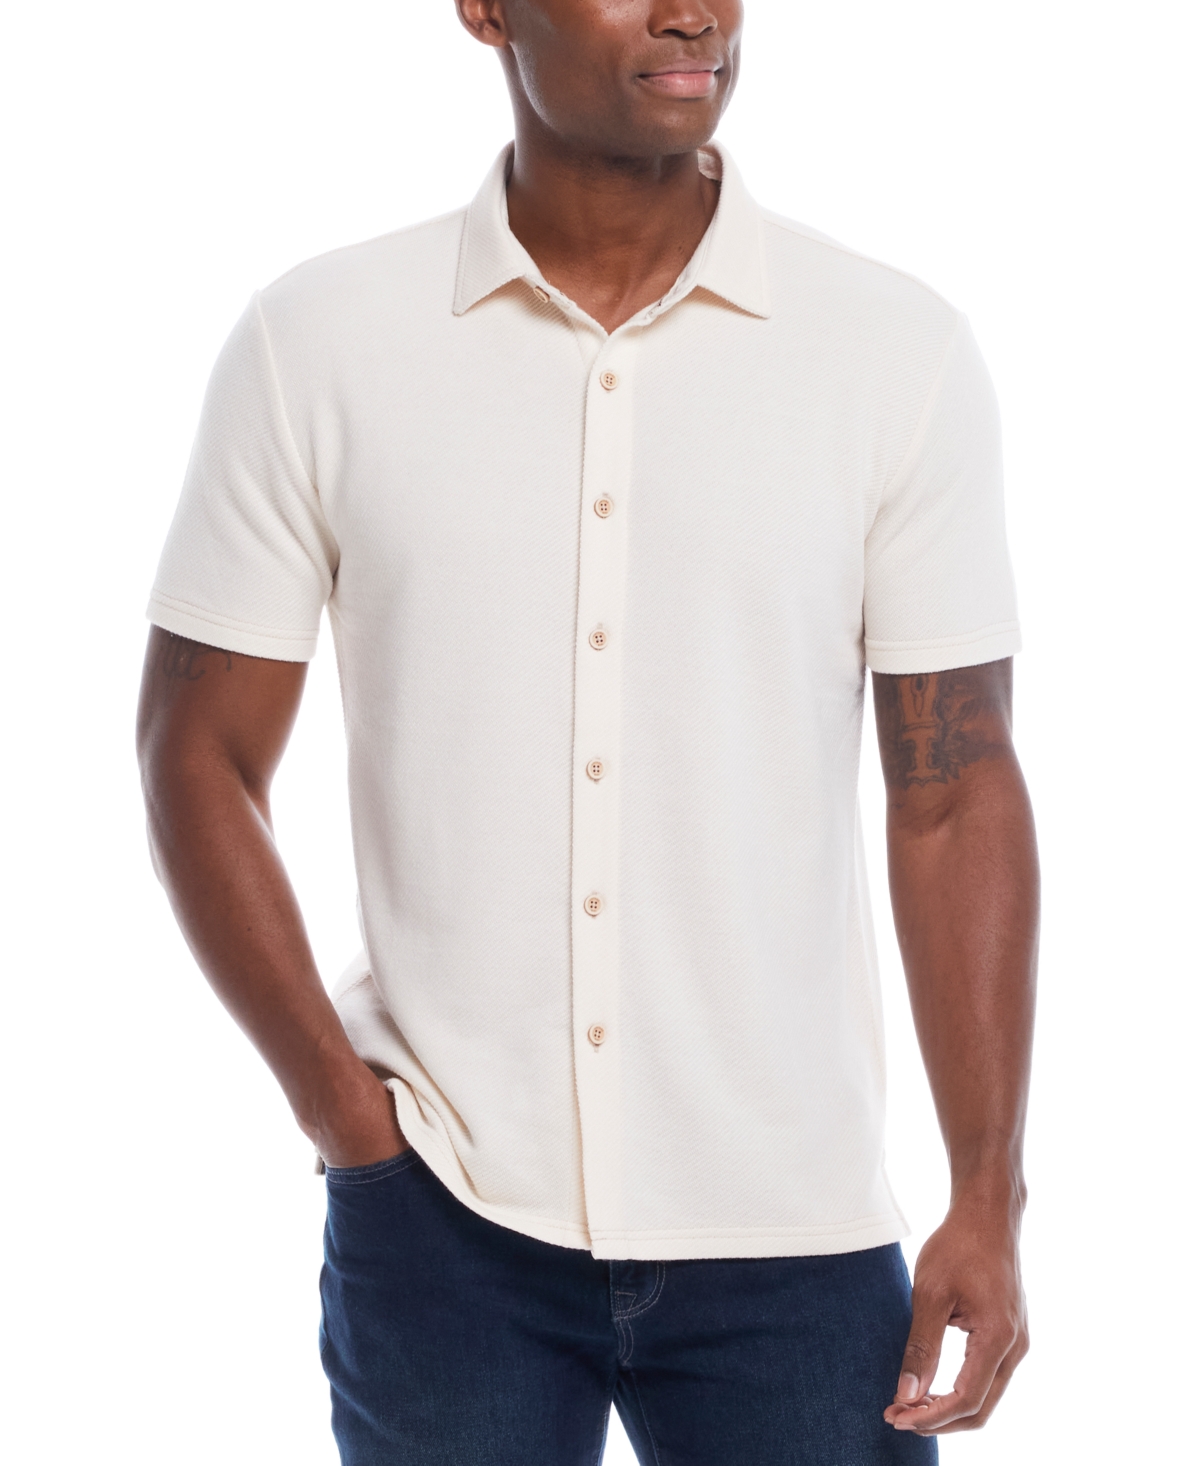 Men's Twill Knit Shirt - WHITECAP